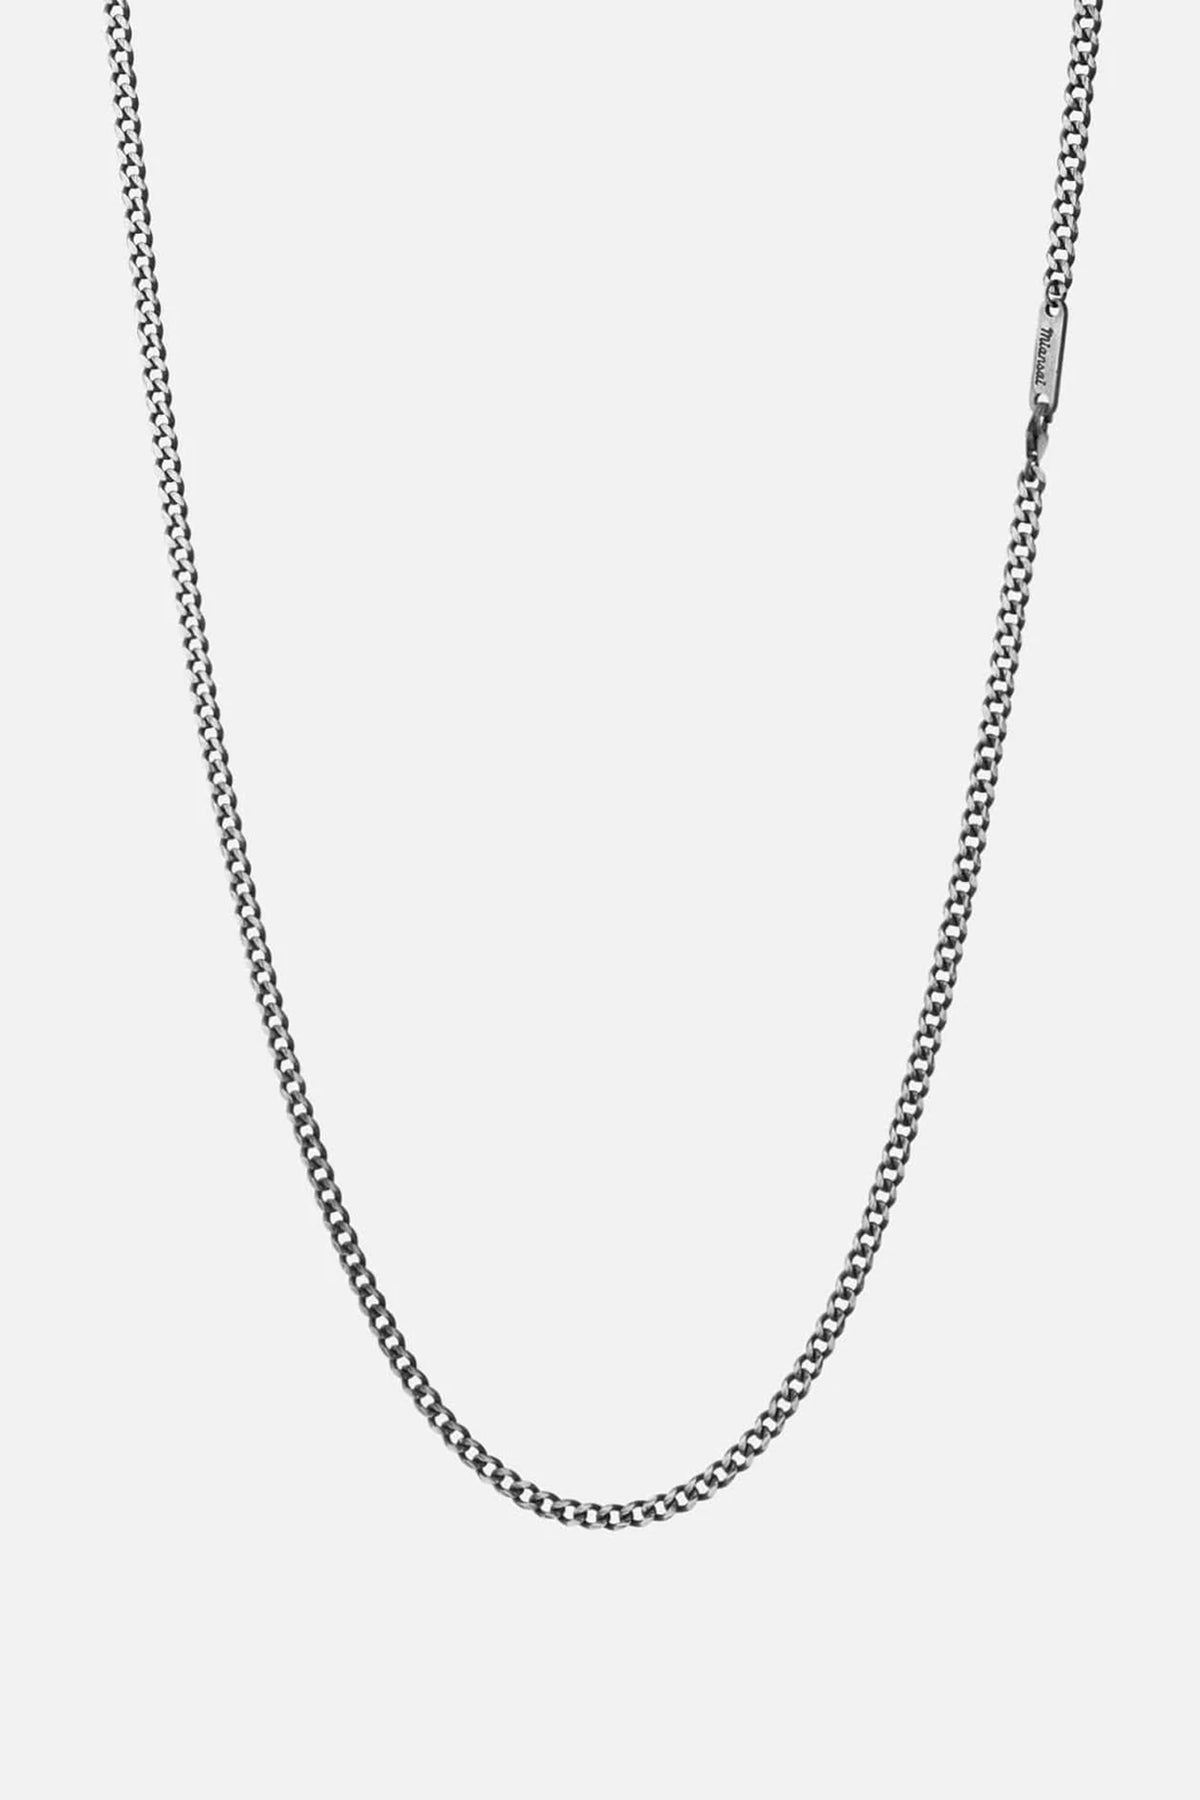 Miansai 3mm Cuban Chain Necklace Sterling Silver